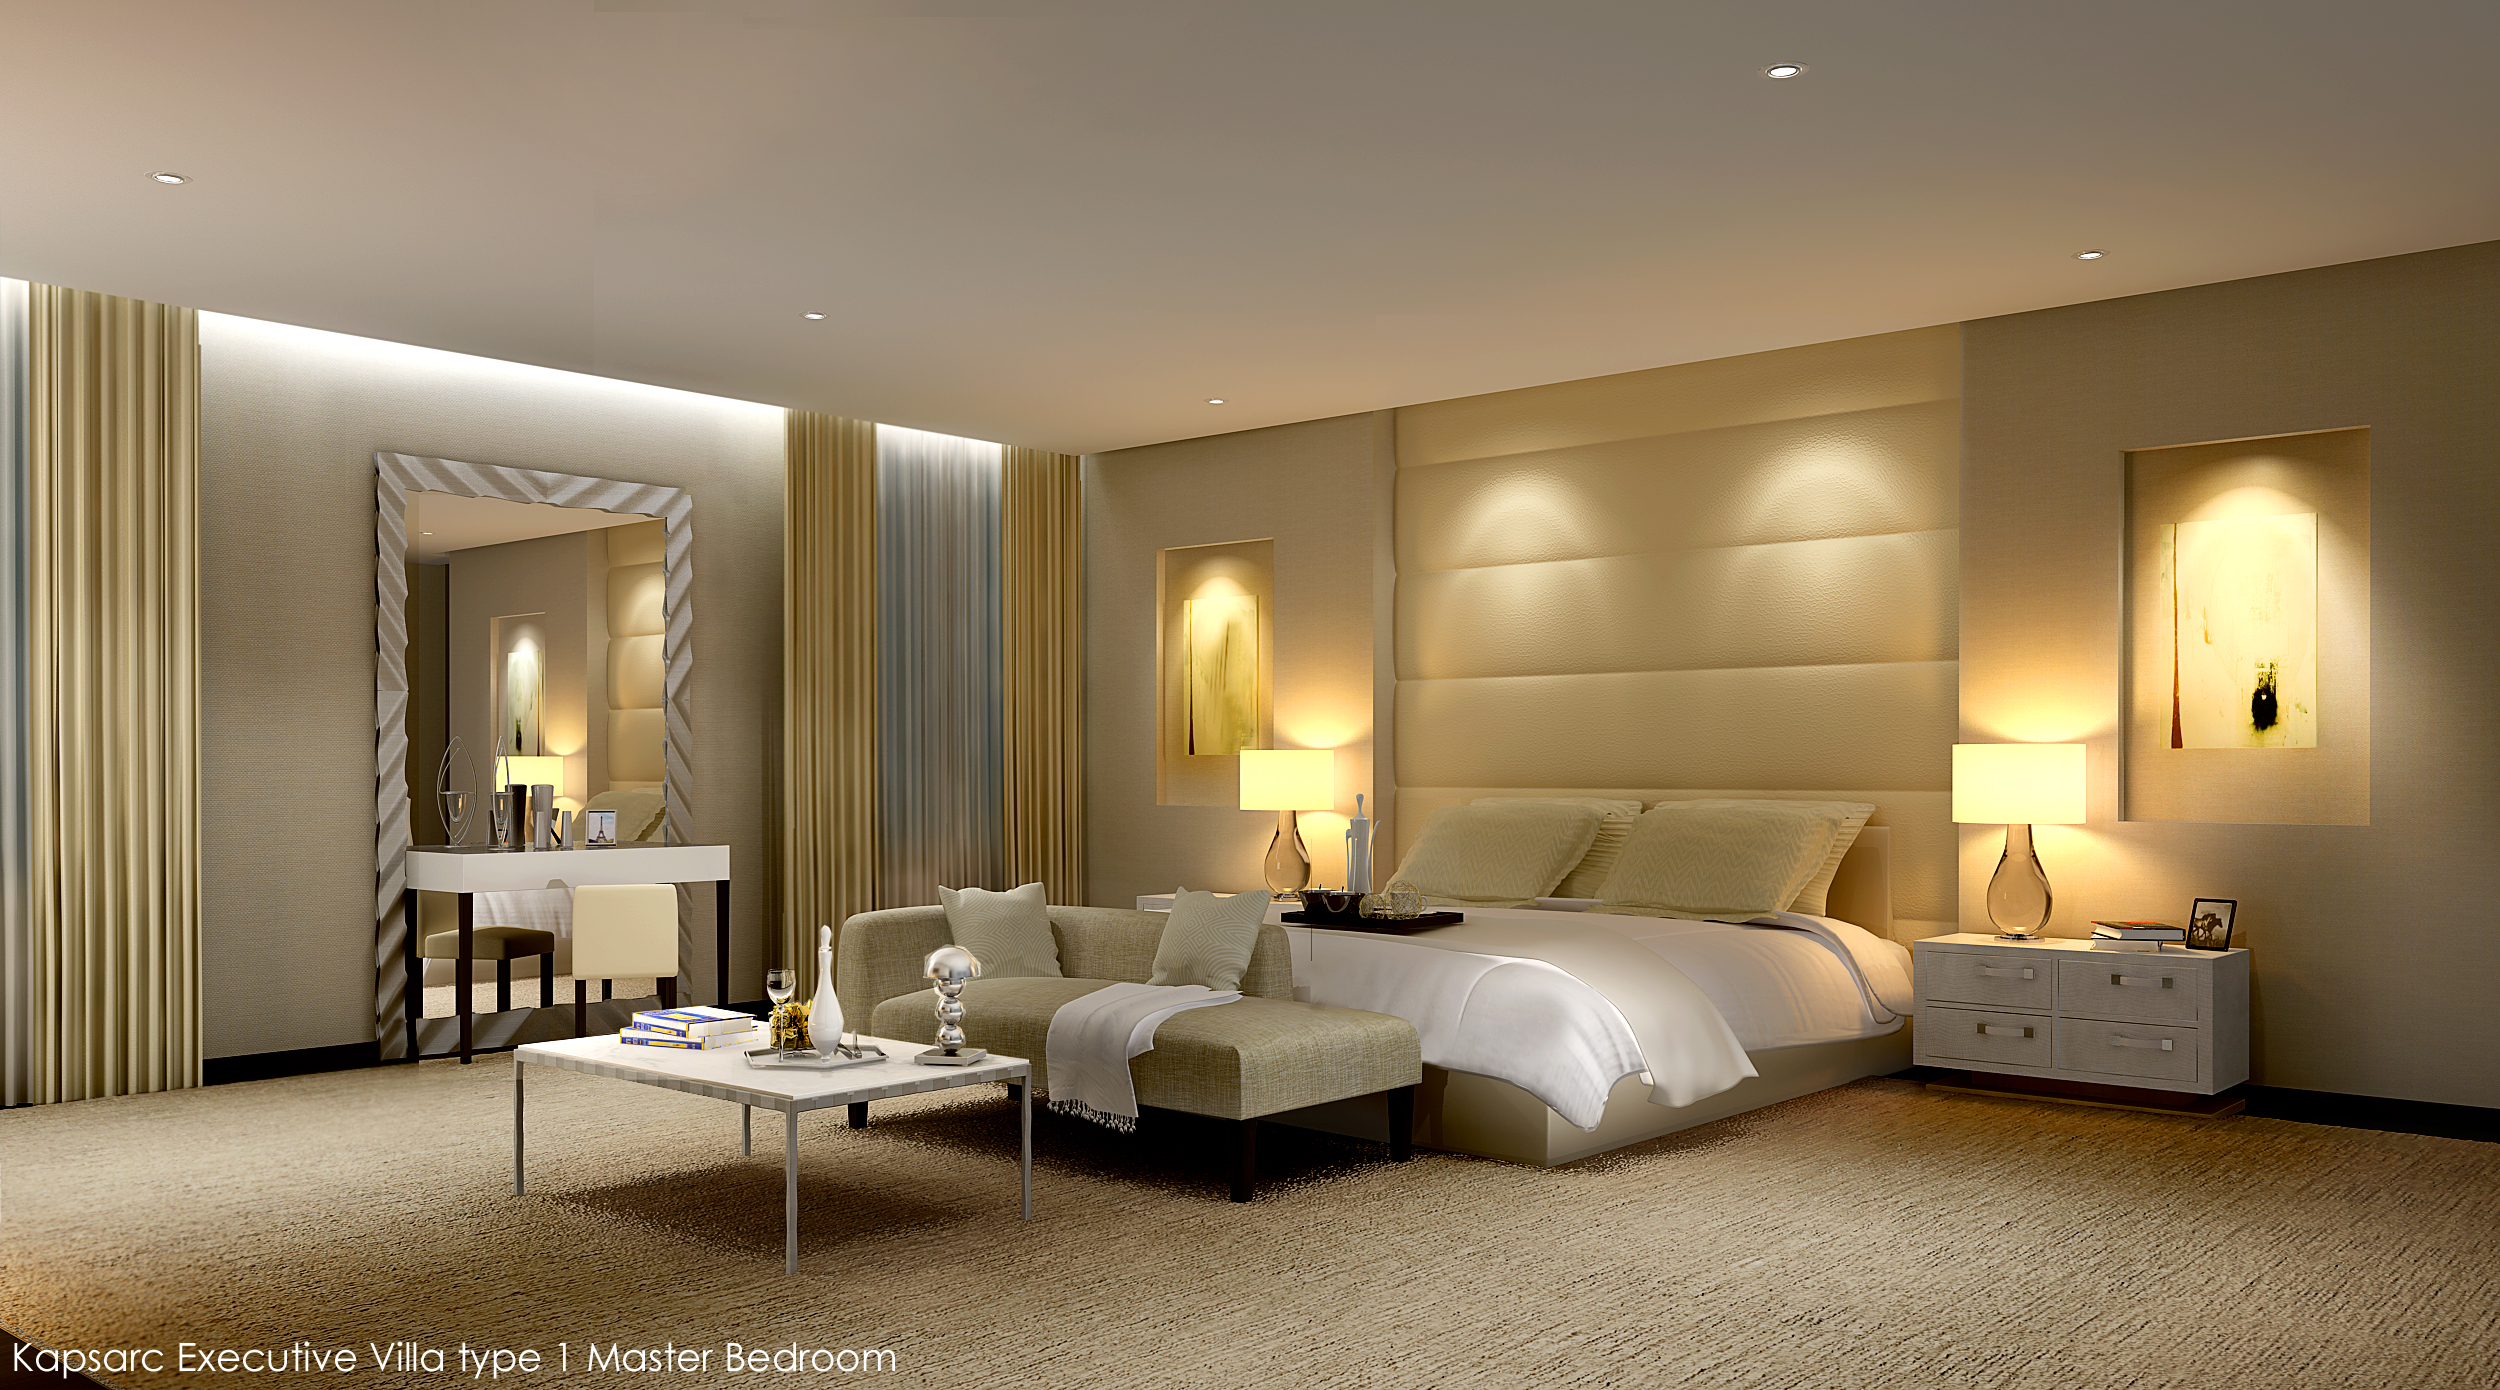 Kapsarc Executive Villa type 1 Master Bedroom.jpg